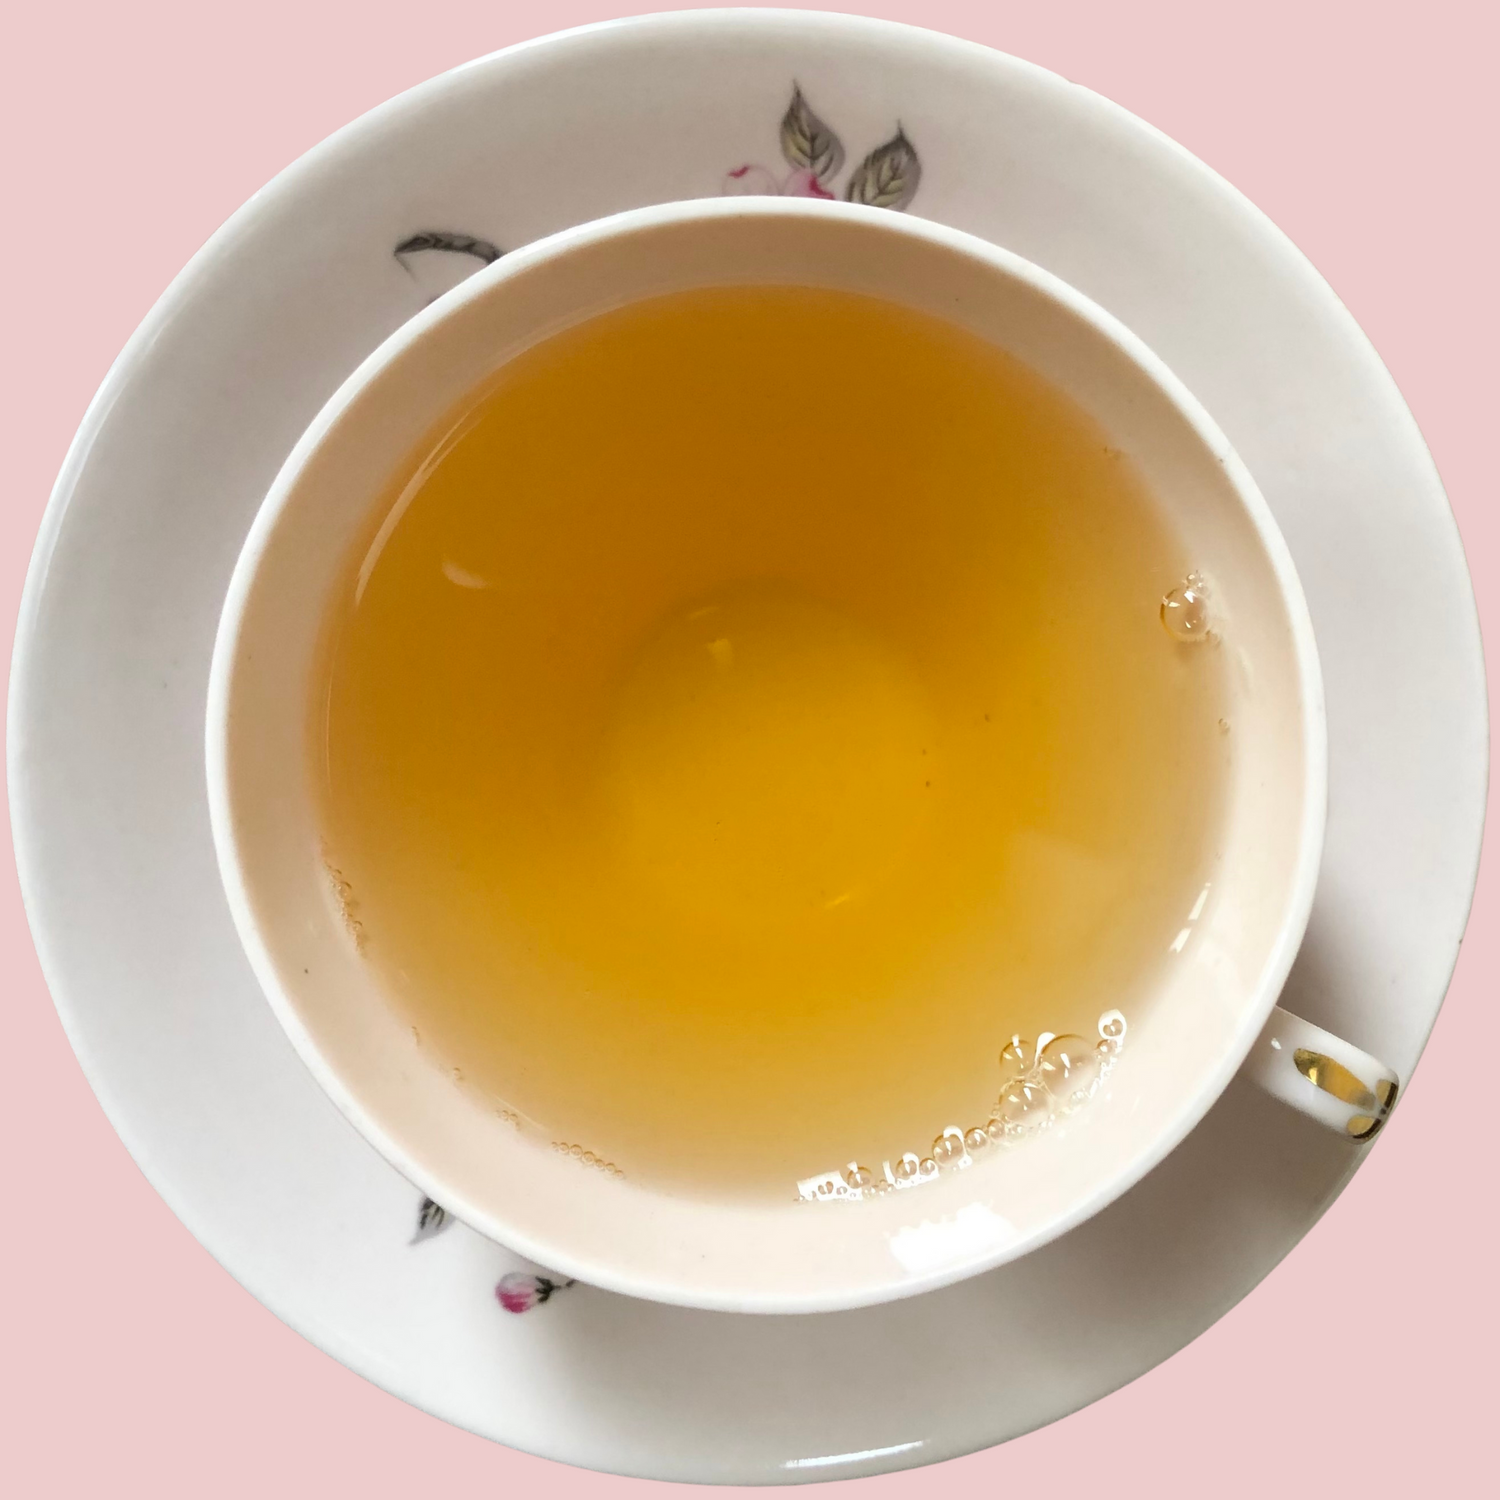 Buy 2023 First Flush Darjeeling Tea Online - Chai Experience